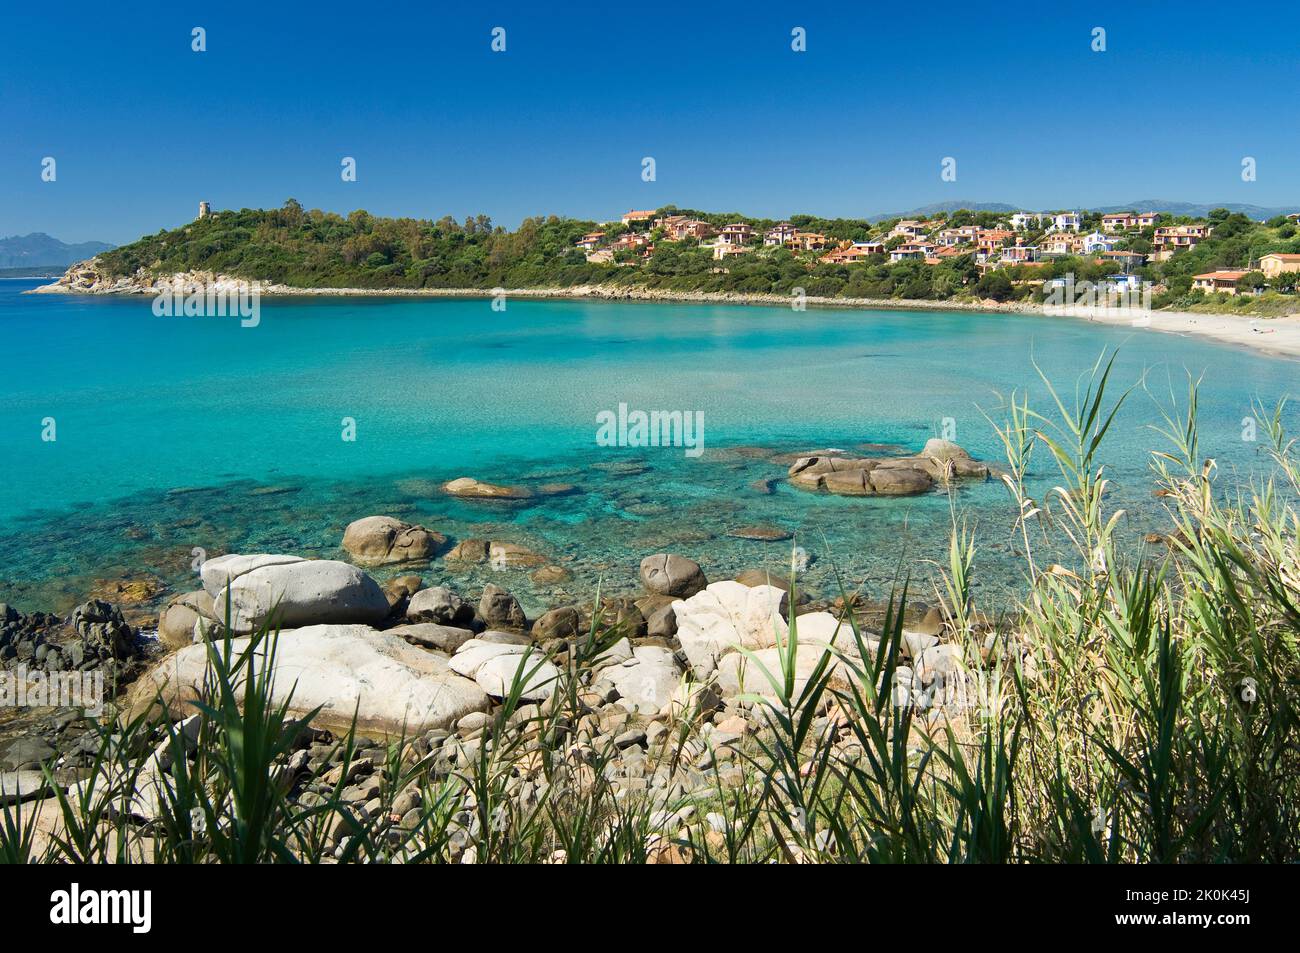 Porto frailis beach arbatax tortolì hi-res stock photography and images -  Alamy